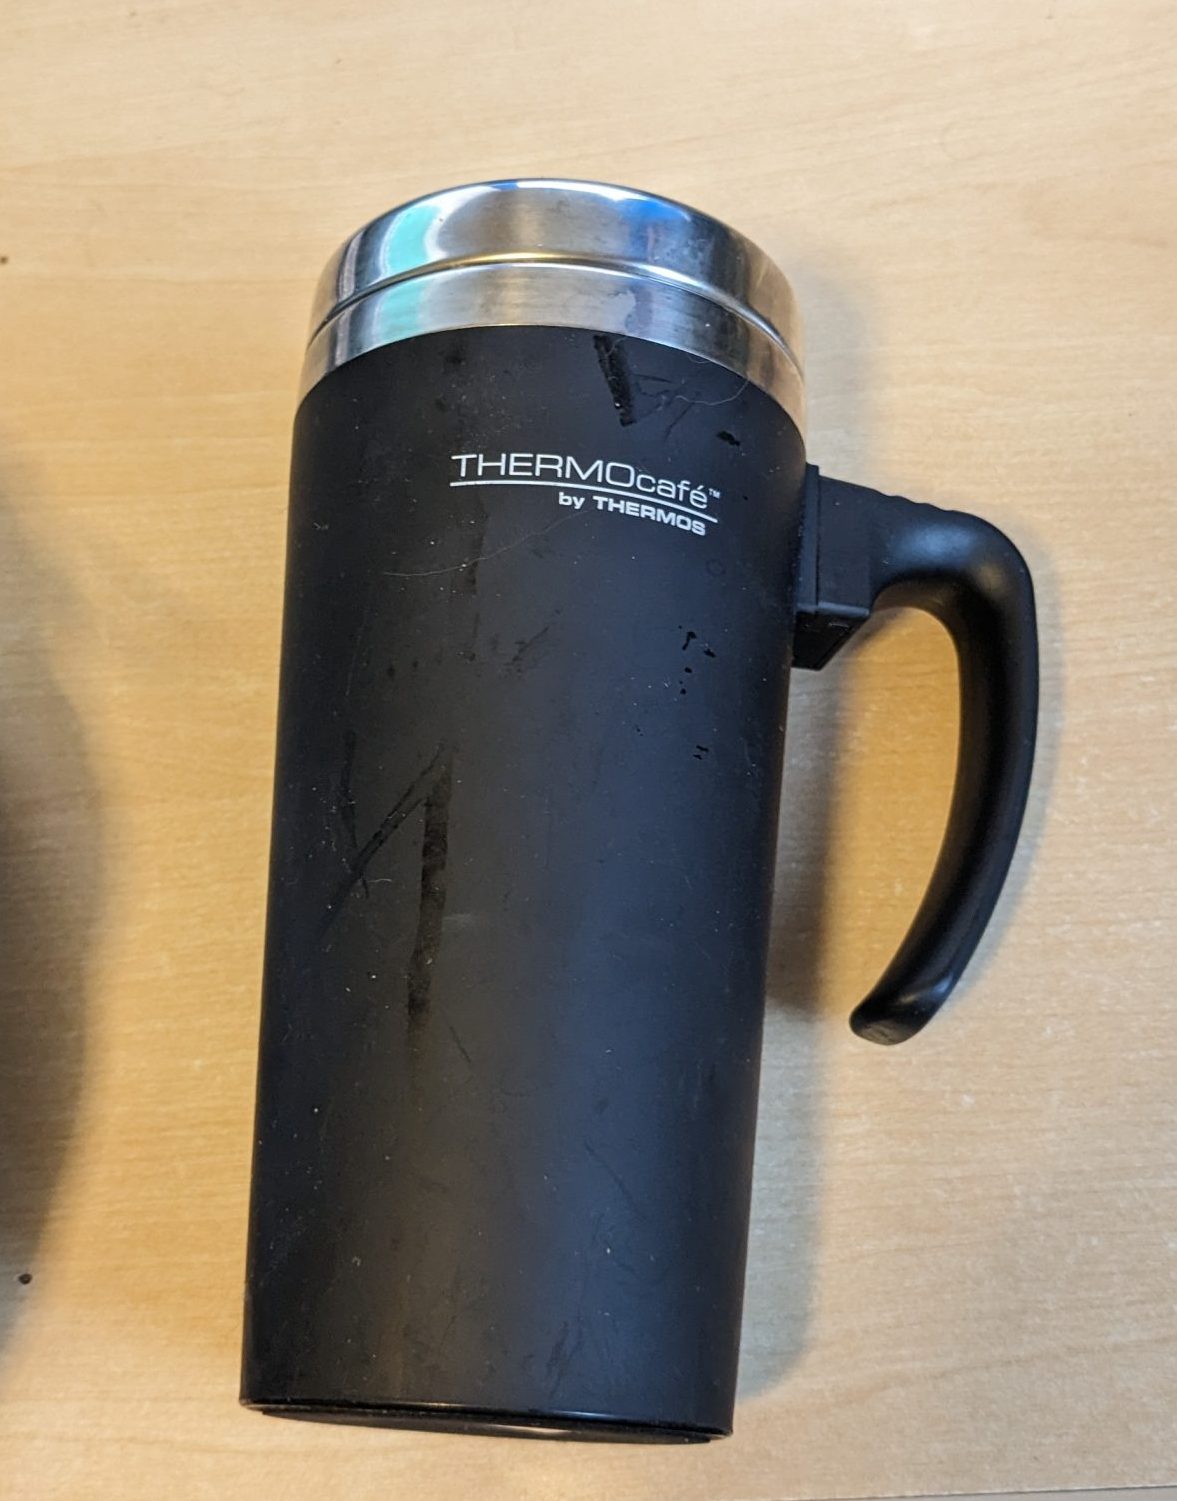 Lost insulated mug